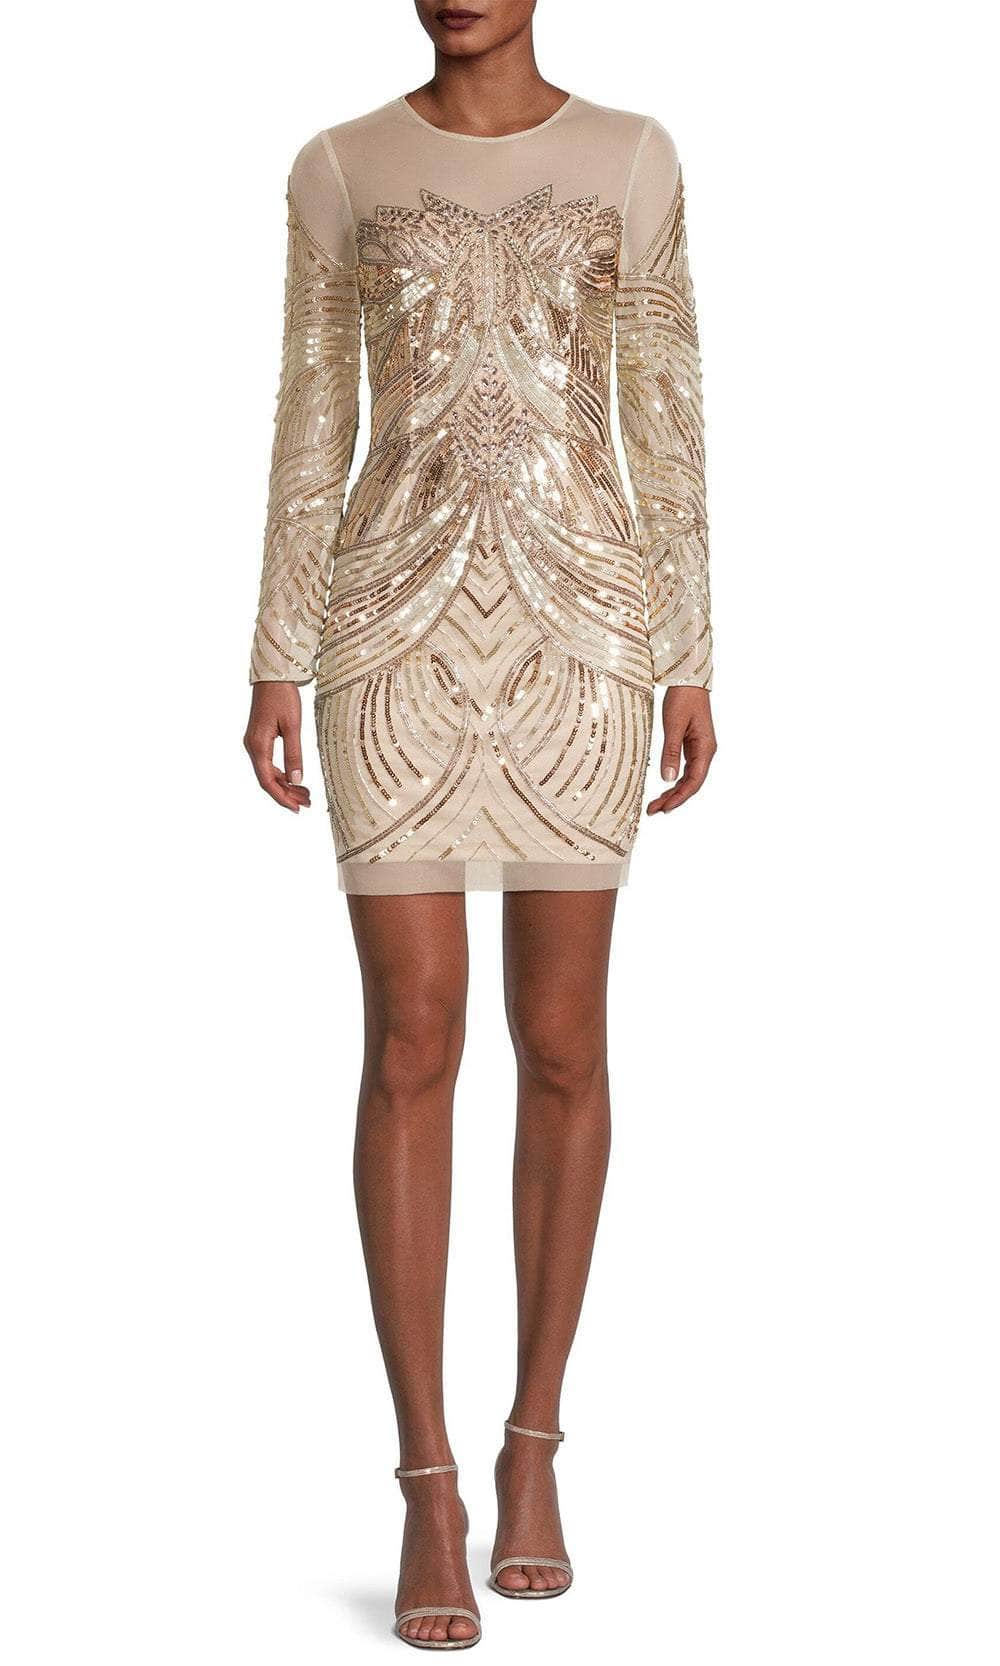 Aidan Mattox MN1E207561 - Long Sleeve Embellished Cocktail Dress Special Occasion Dress 0 / Light Gold